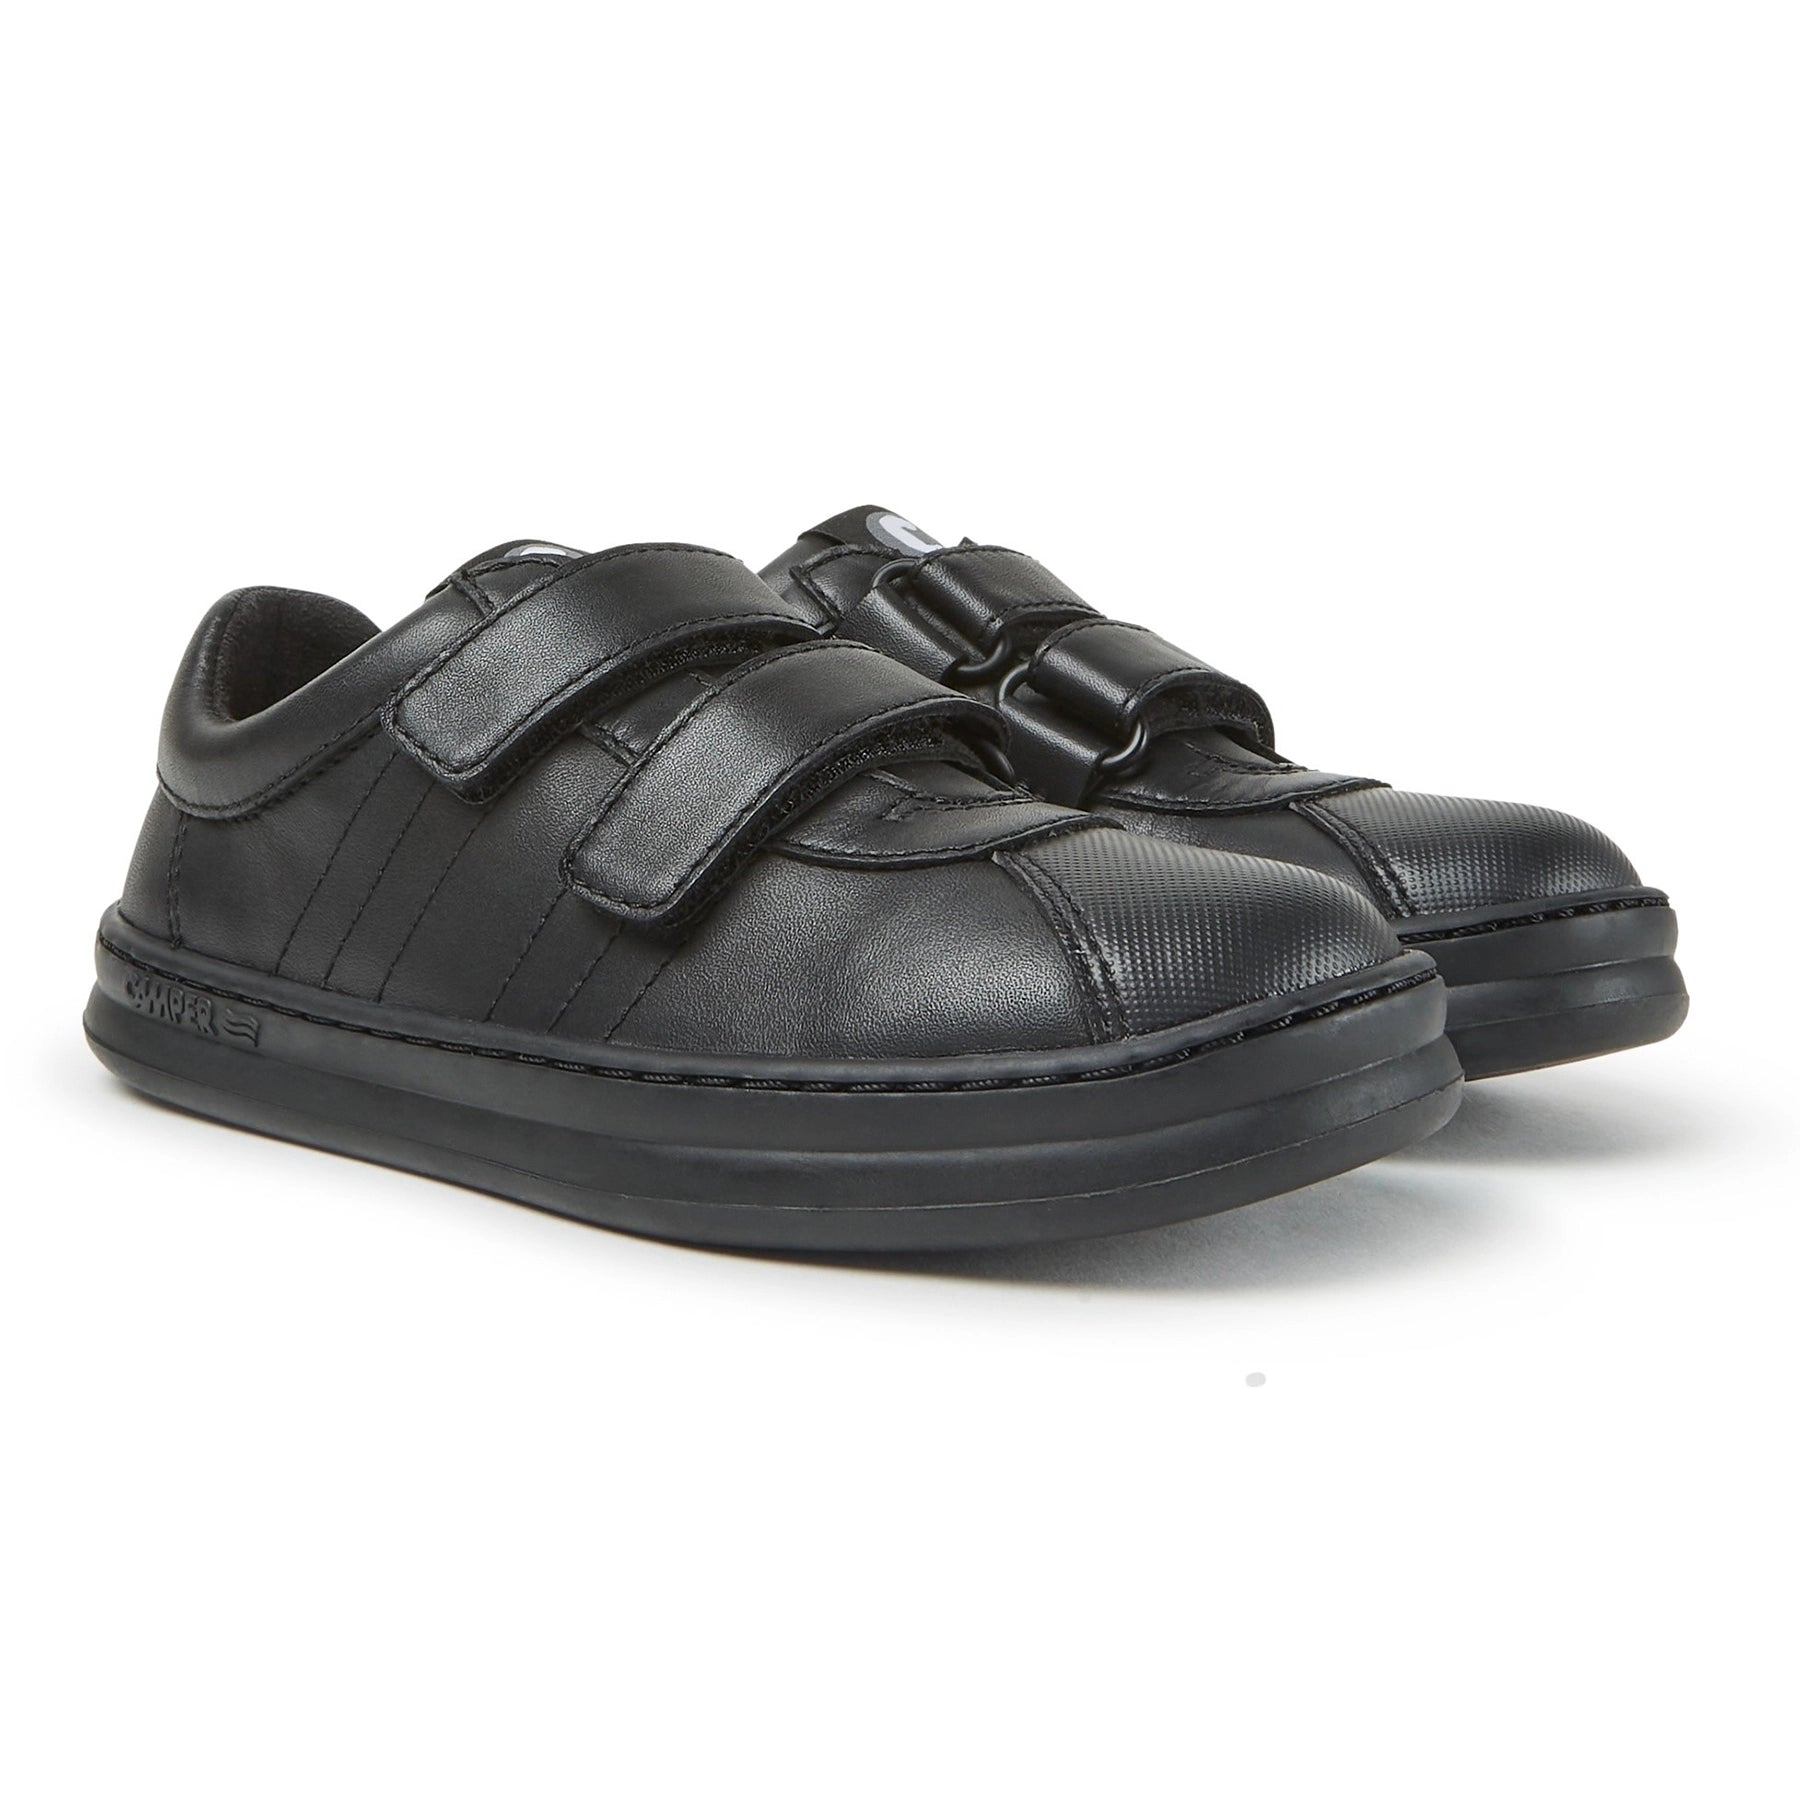 An image of Buy Camper Runner Kids School Shoes Black – SmallSmart UK EU32/UK13